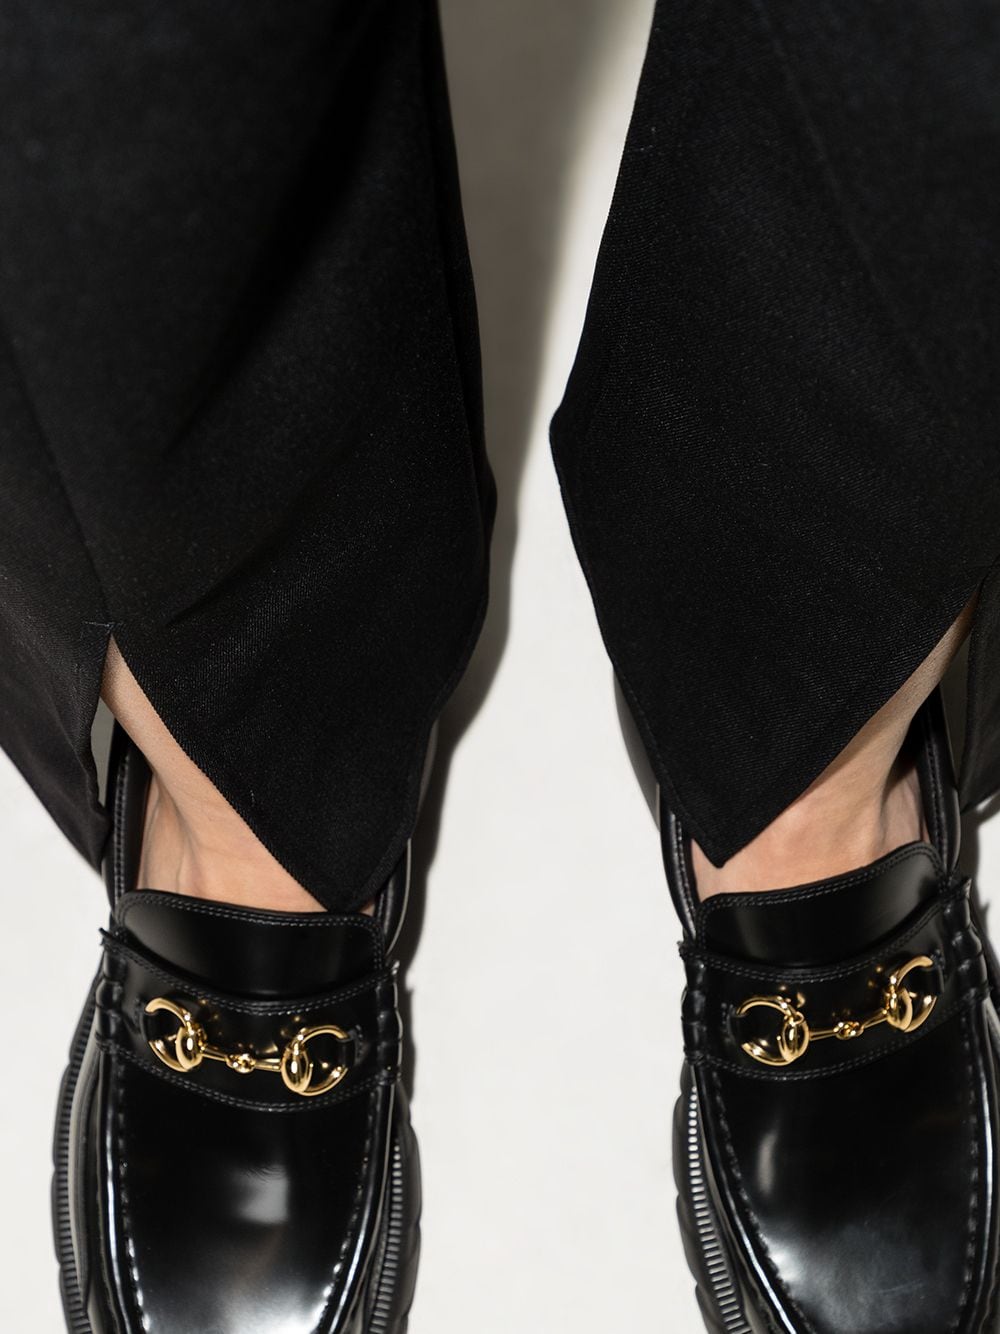 Asymmetrical Twill Trousers - Black